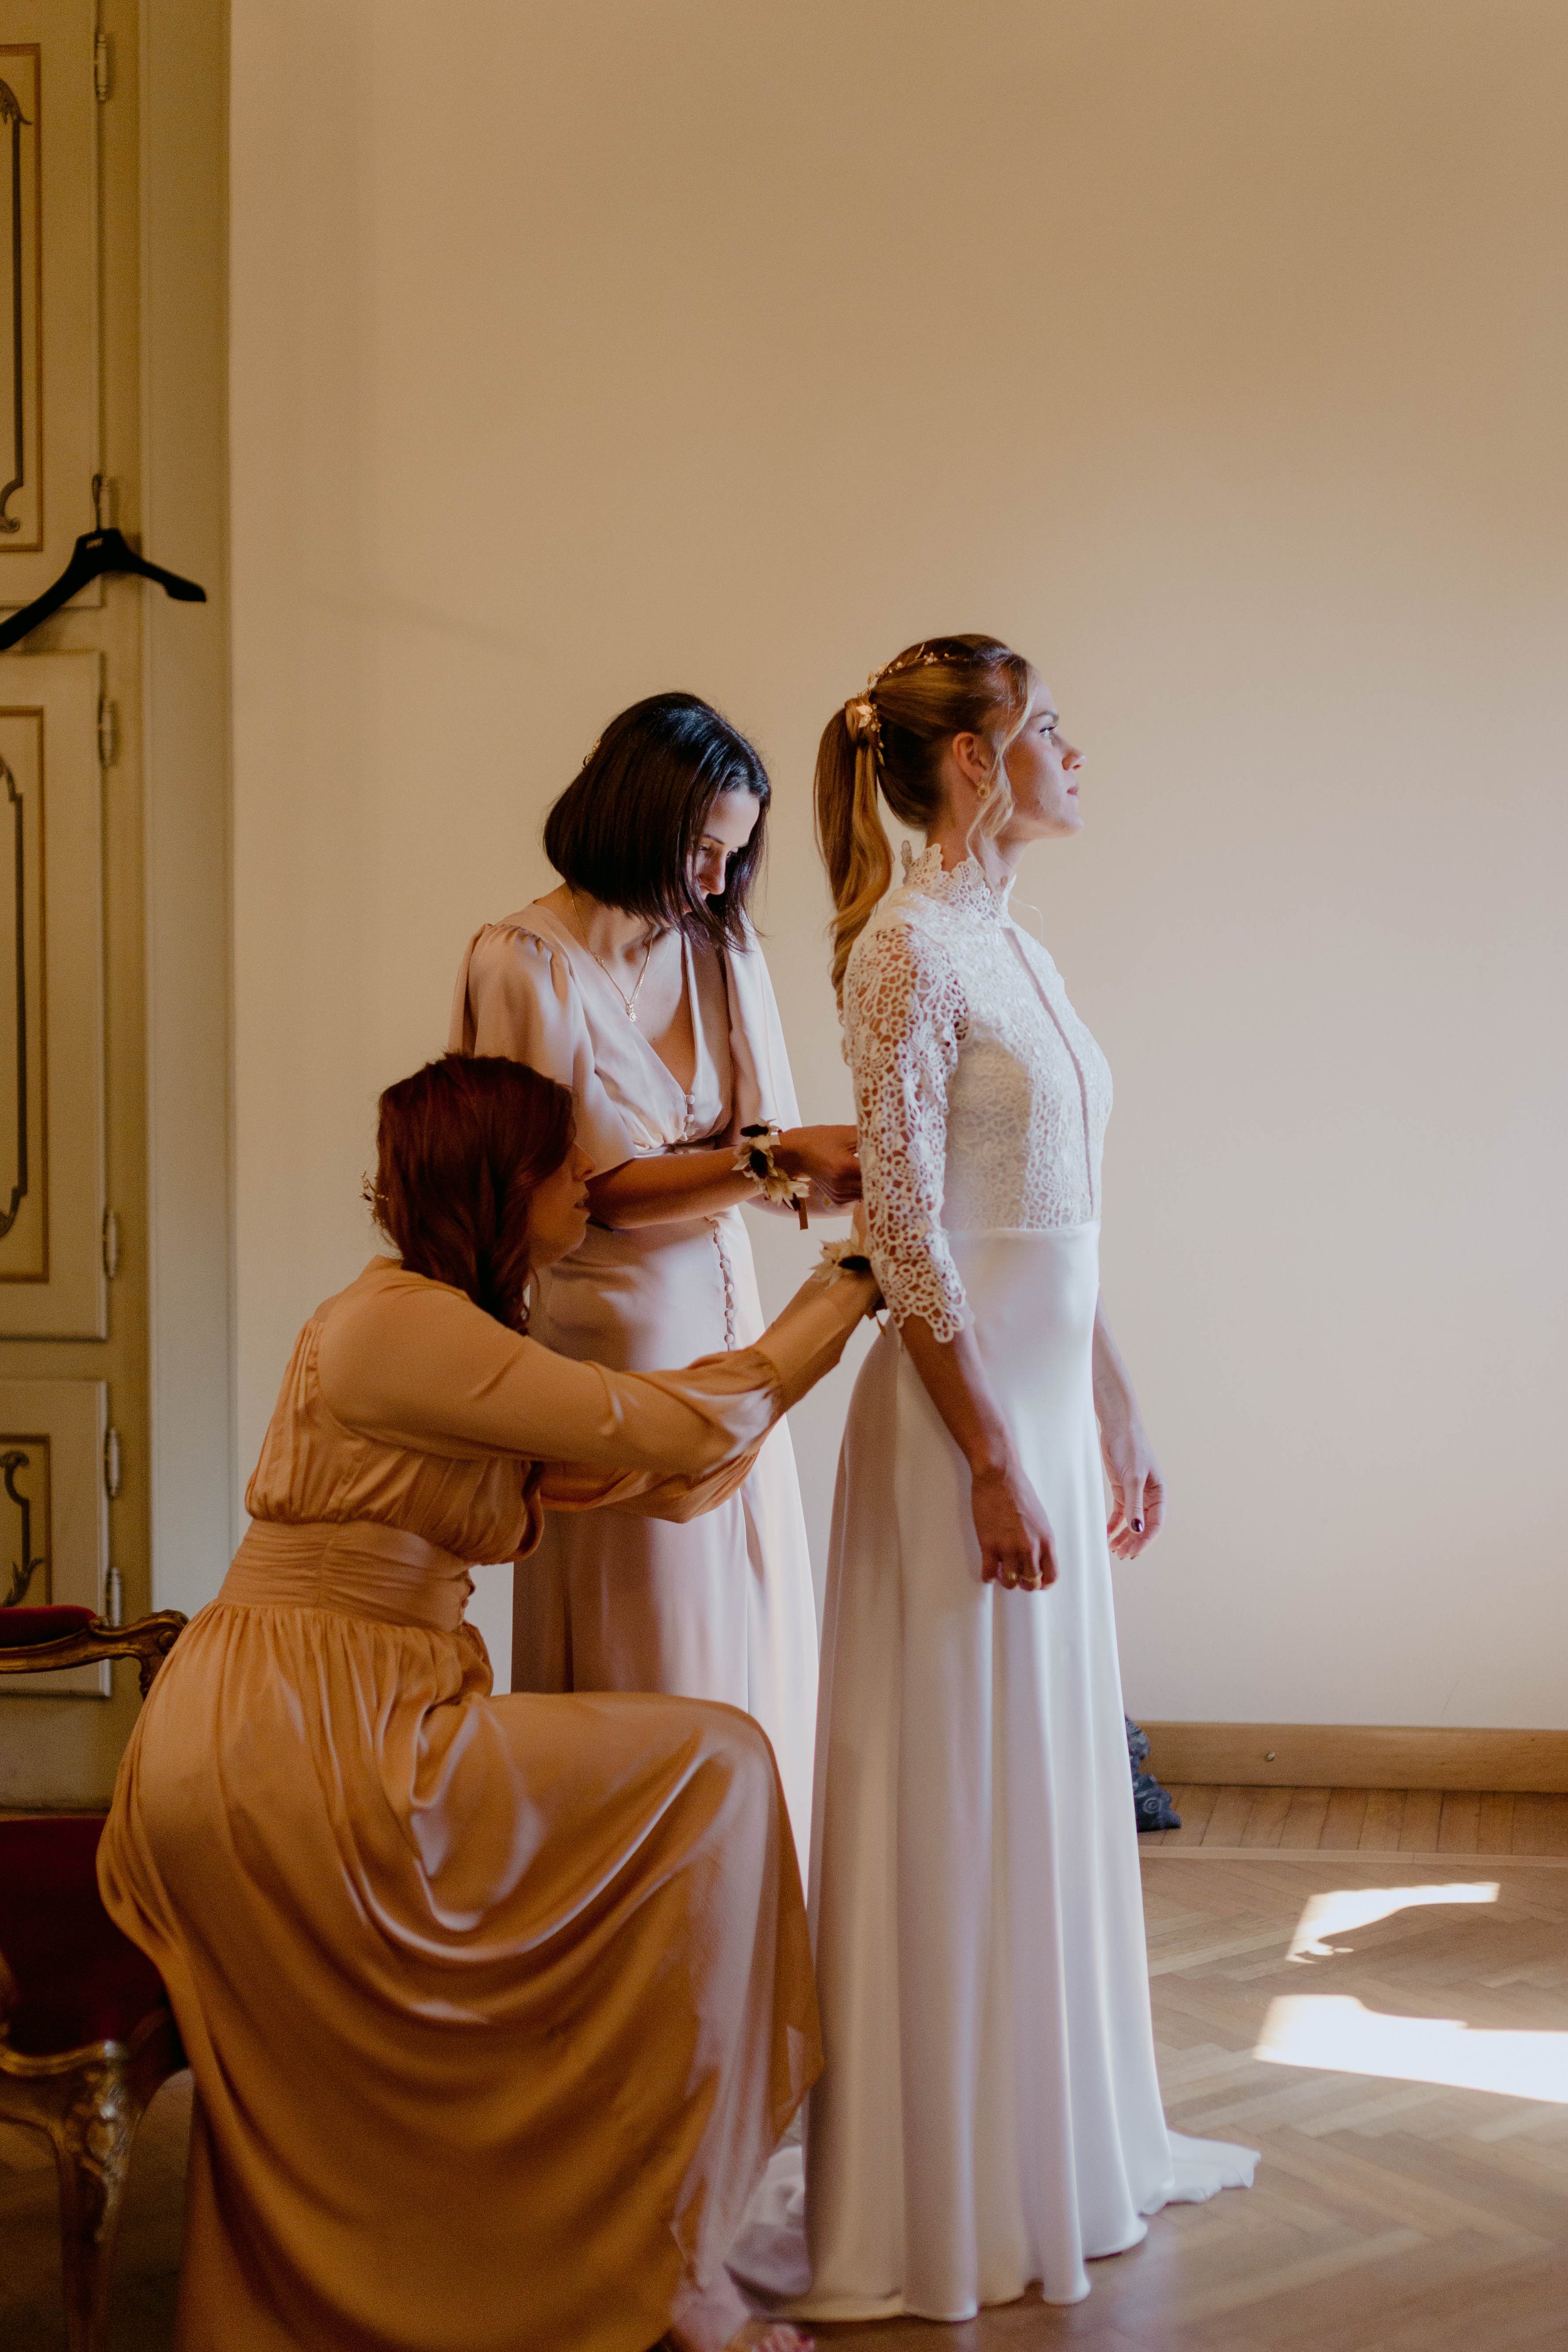 081 - Preparazione sposa - Miriam Callegari Fotografa.JPG